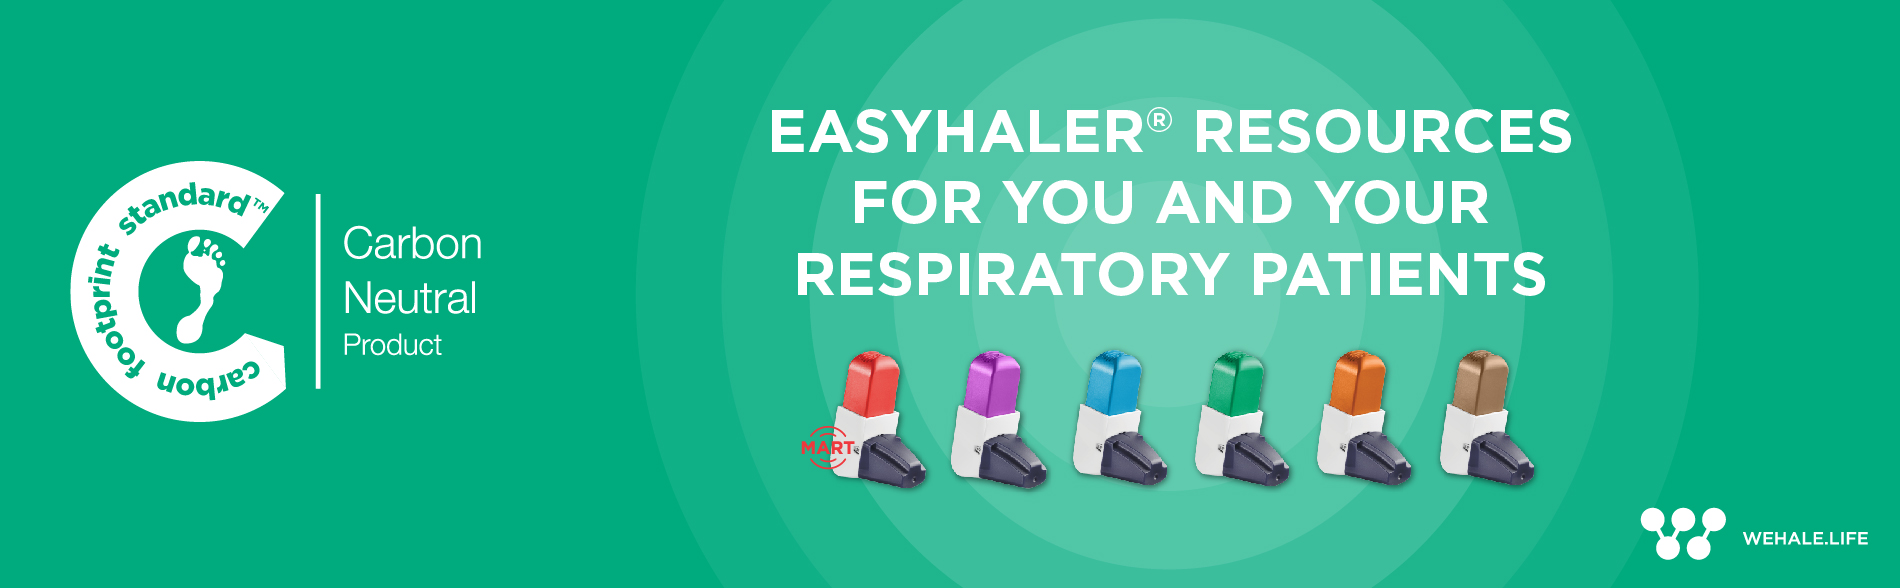 Easyhaler<sup>®</sup> Patient Resources